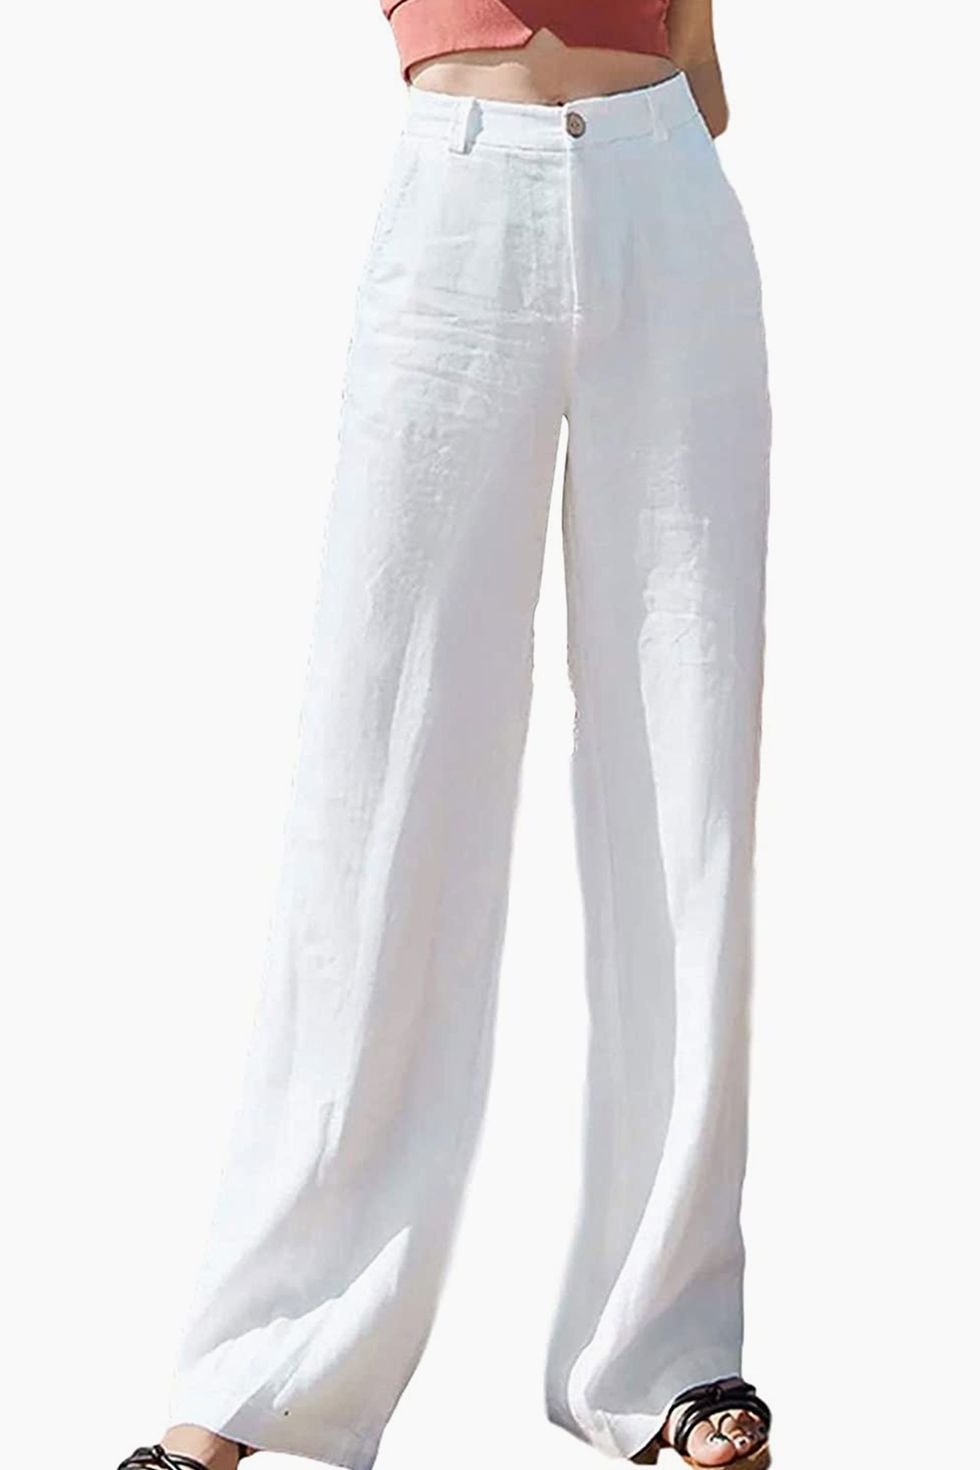 Linen Pants Women, Maxi Pants, Beach Pants, 20 COLORS, White Linen Pants  for Women, Straight Pants for Summer, Summer Pants for Her -  Singapore